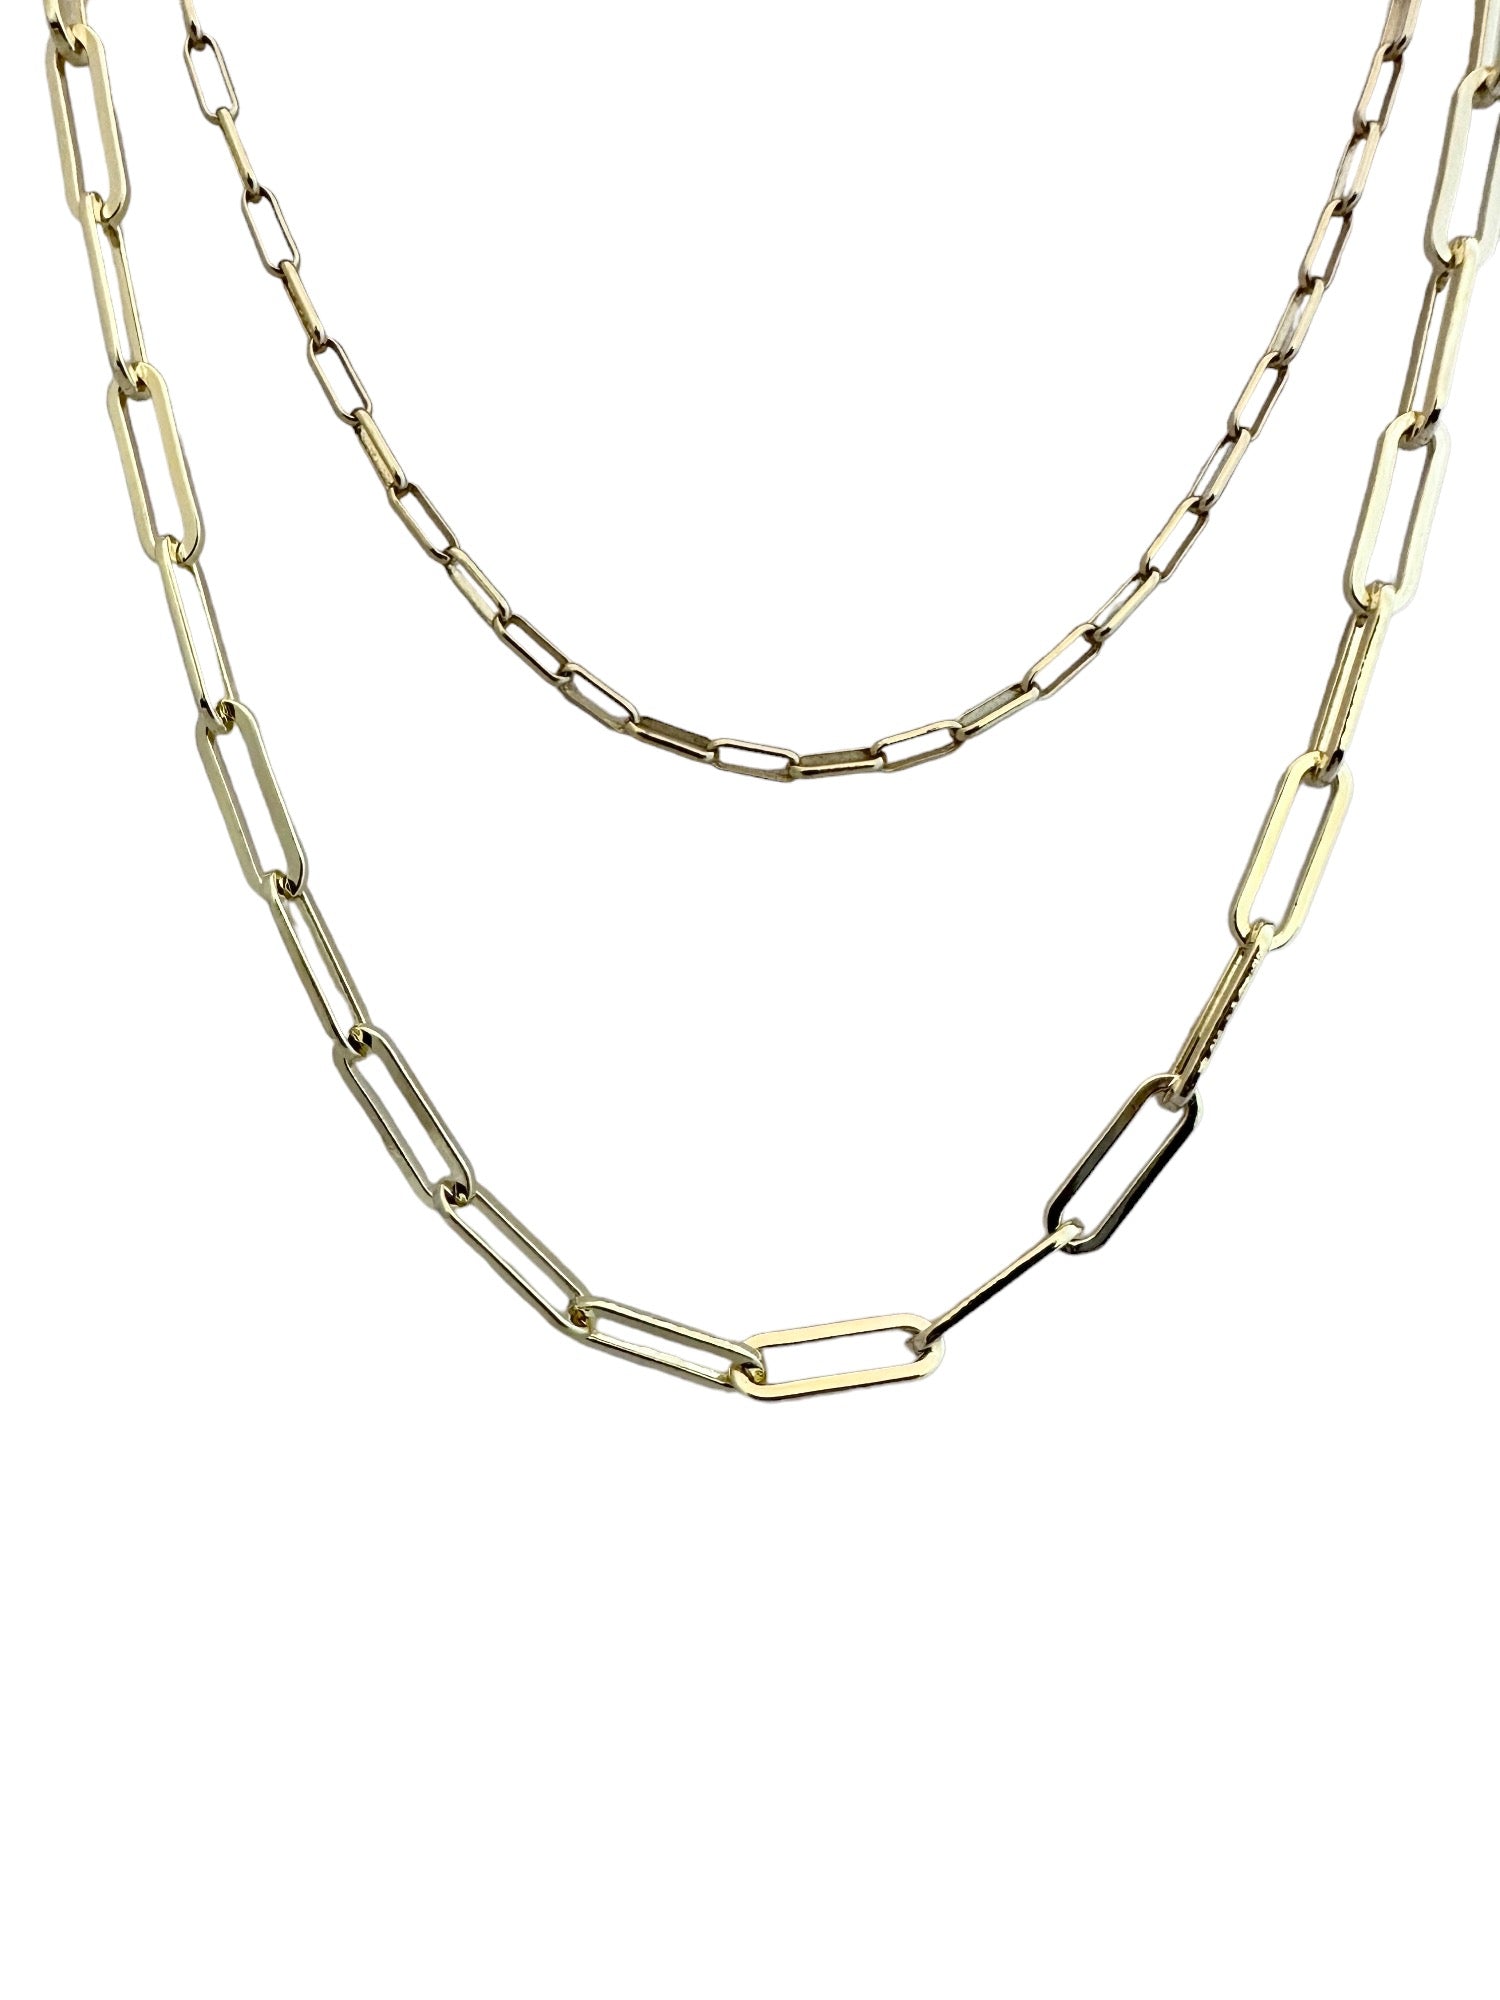 Shiny Paperclip Necklace - 2 sizes